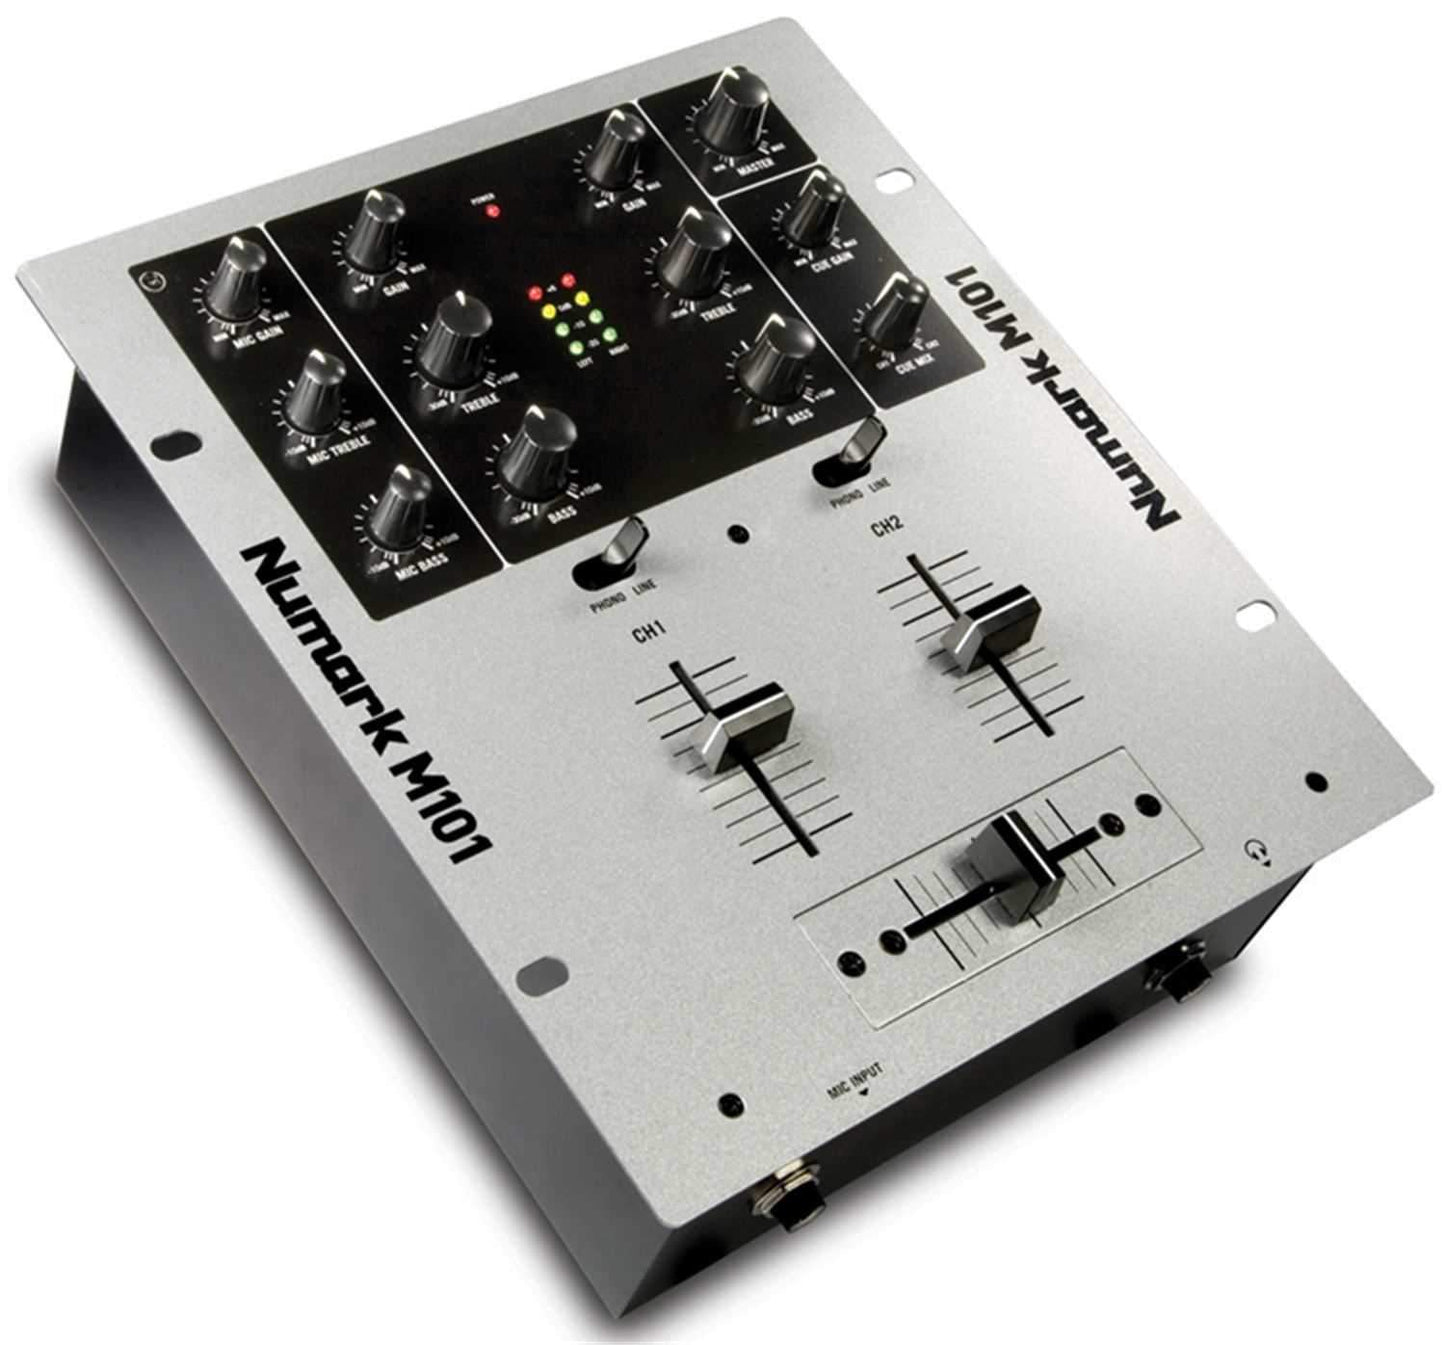 Numark M101 2 Channel 10 in Scratch DJ Mixer - PSSL ProSound and Stage Lighting